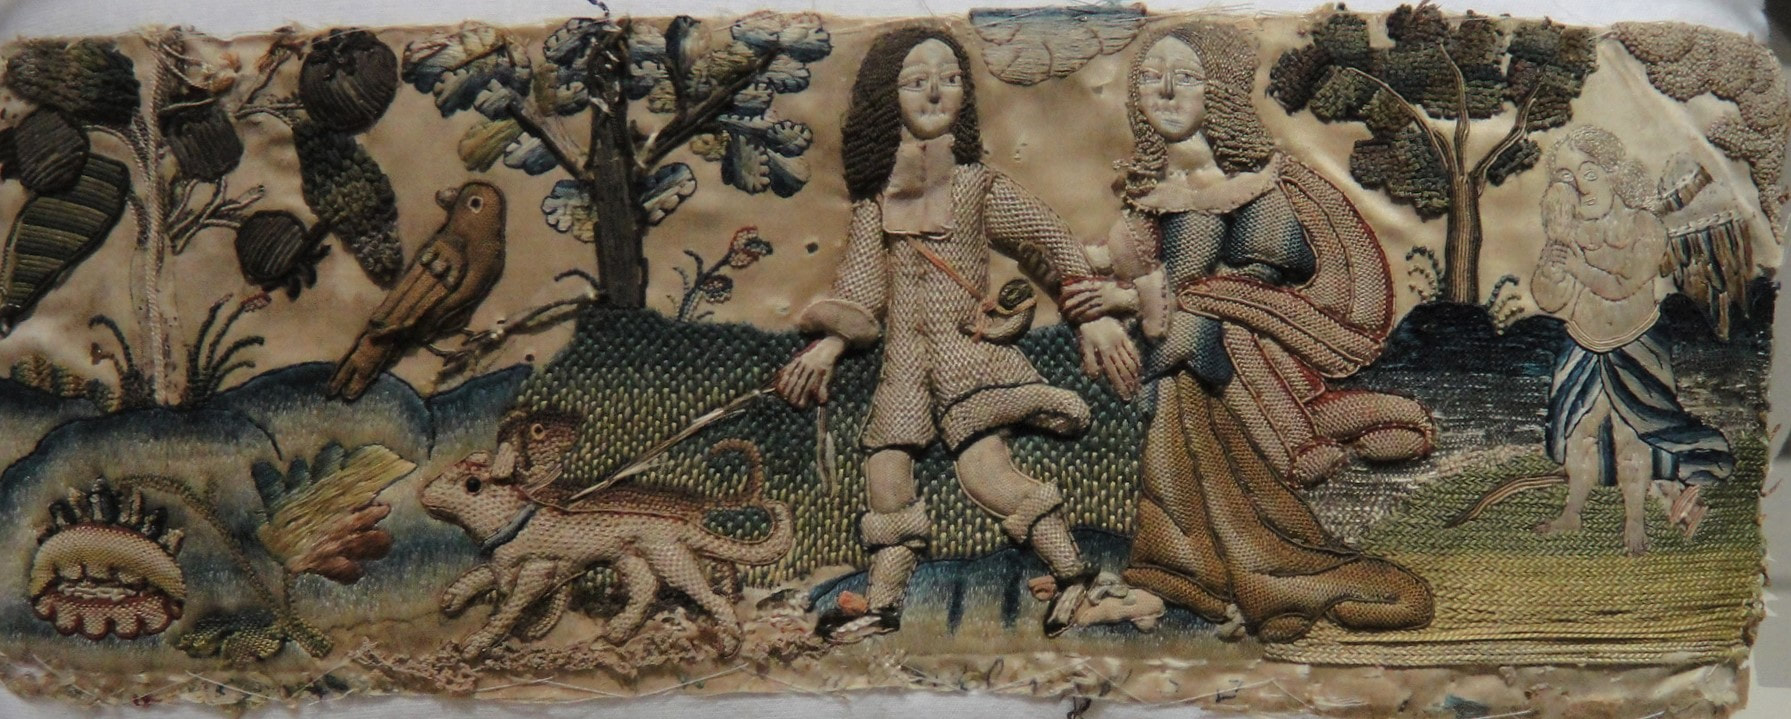 Embroidered panel, stumpwork embroidery,  Venus and Adonis, British, 1660-1680